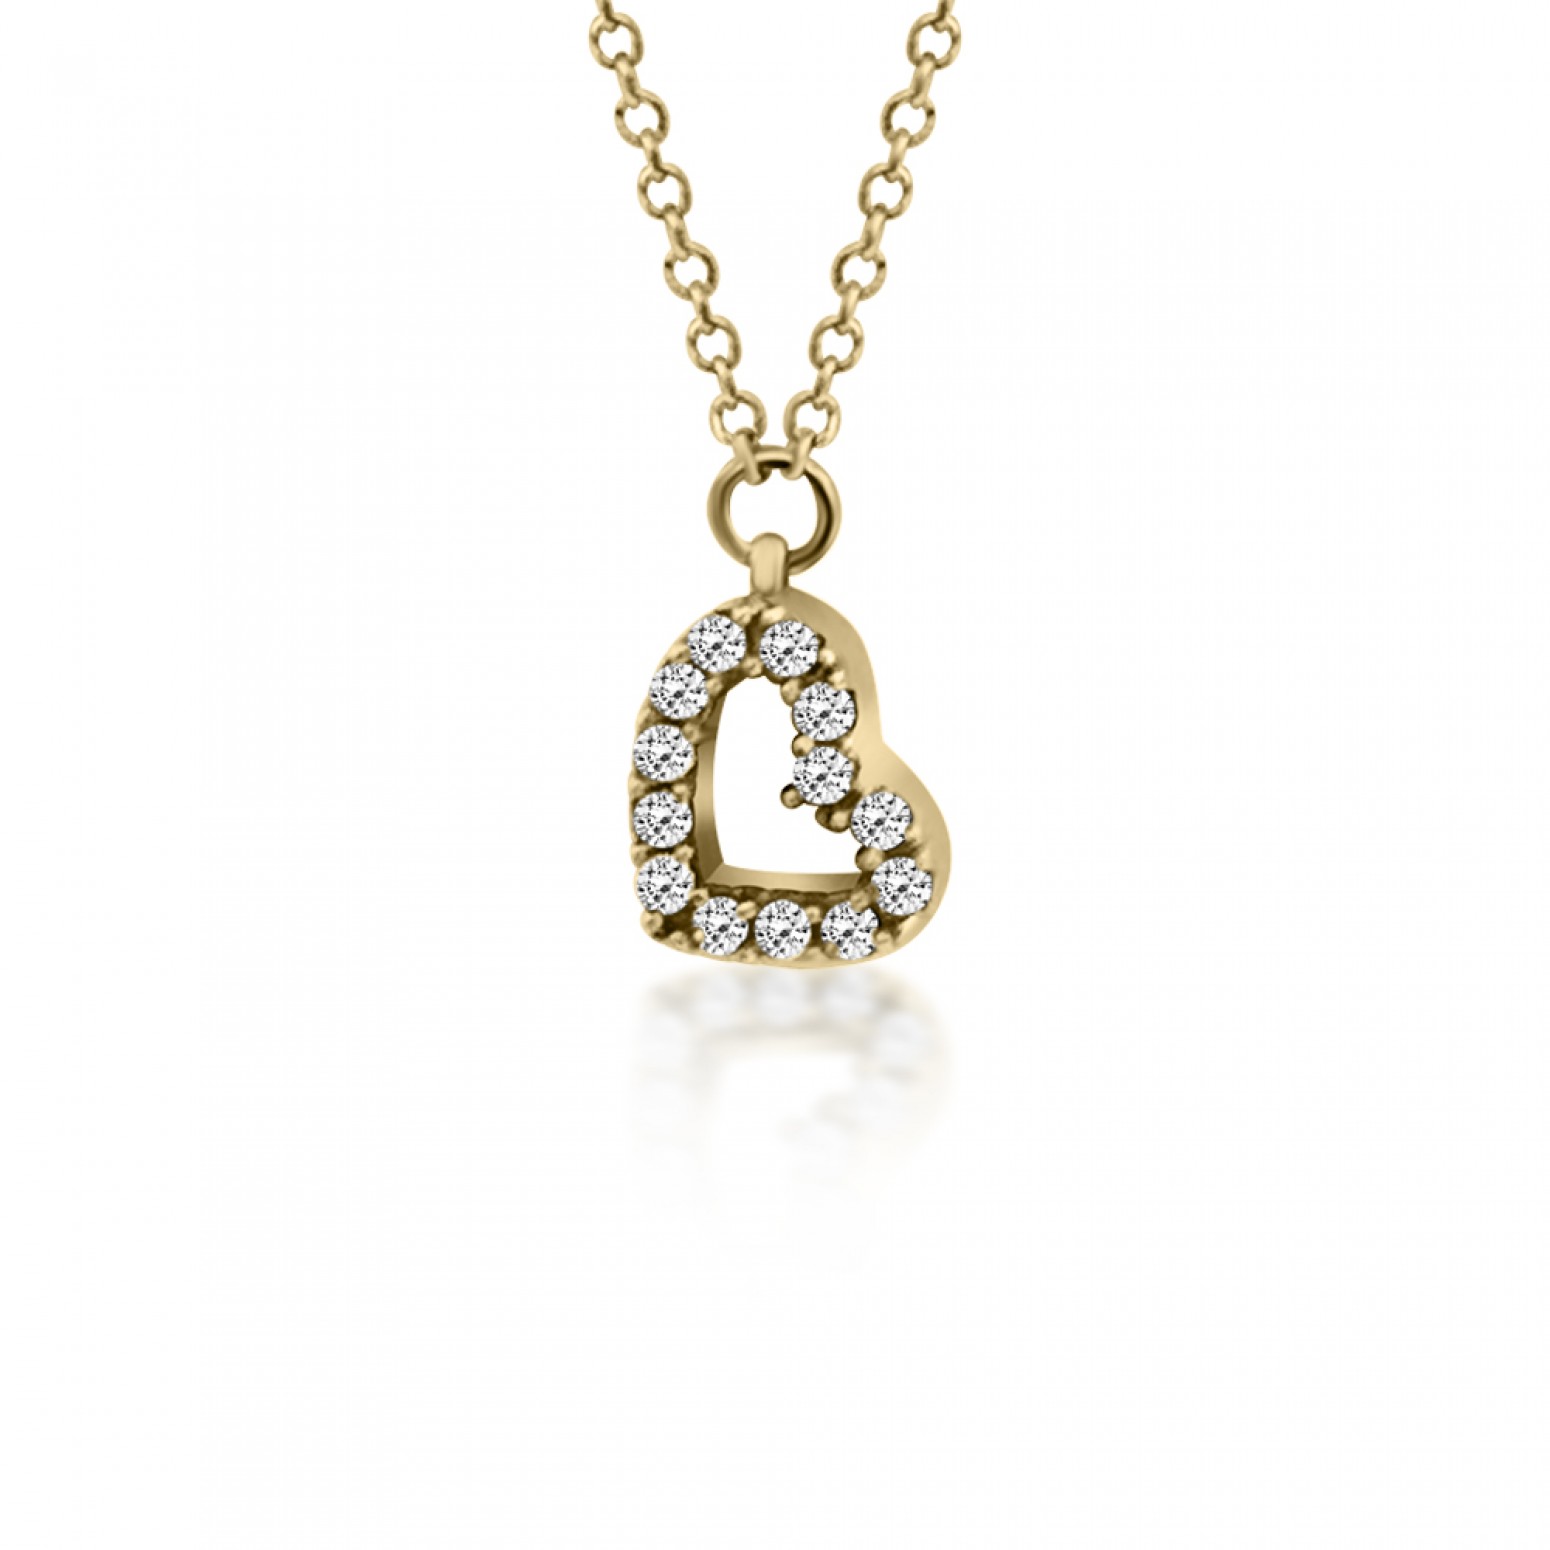 Heart necklace, Κ9 gold with zircon, ko5092 NECKLACES Κοσμηματα - chrilia.gr